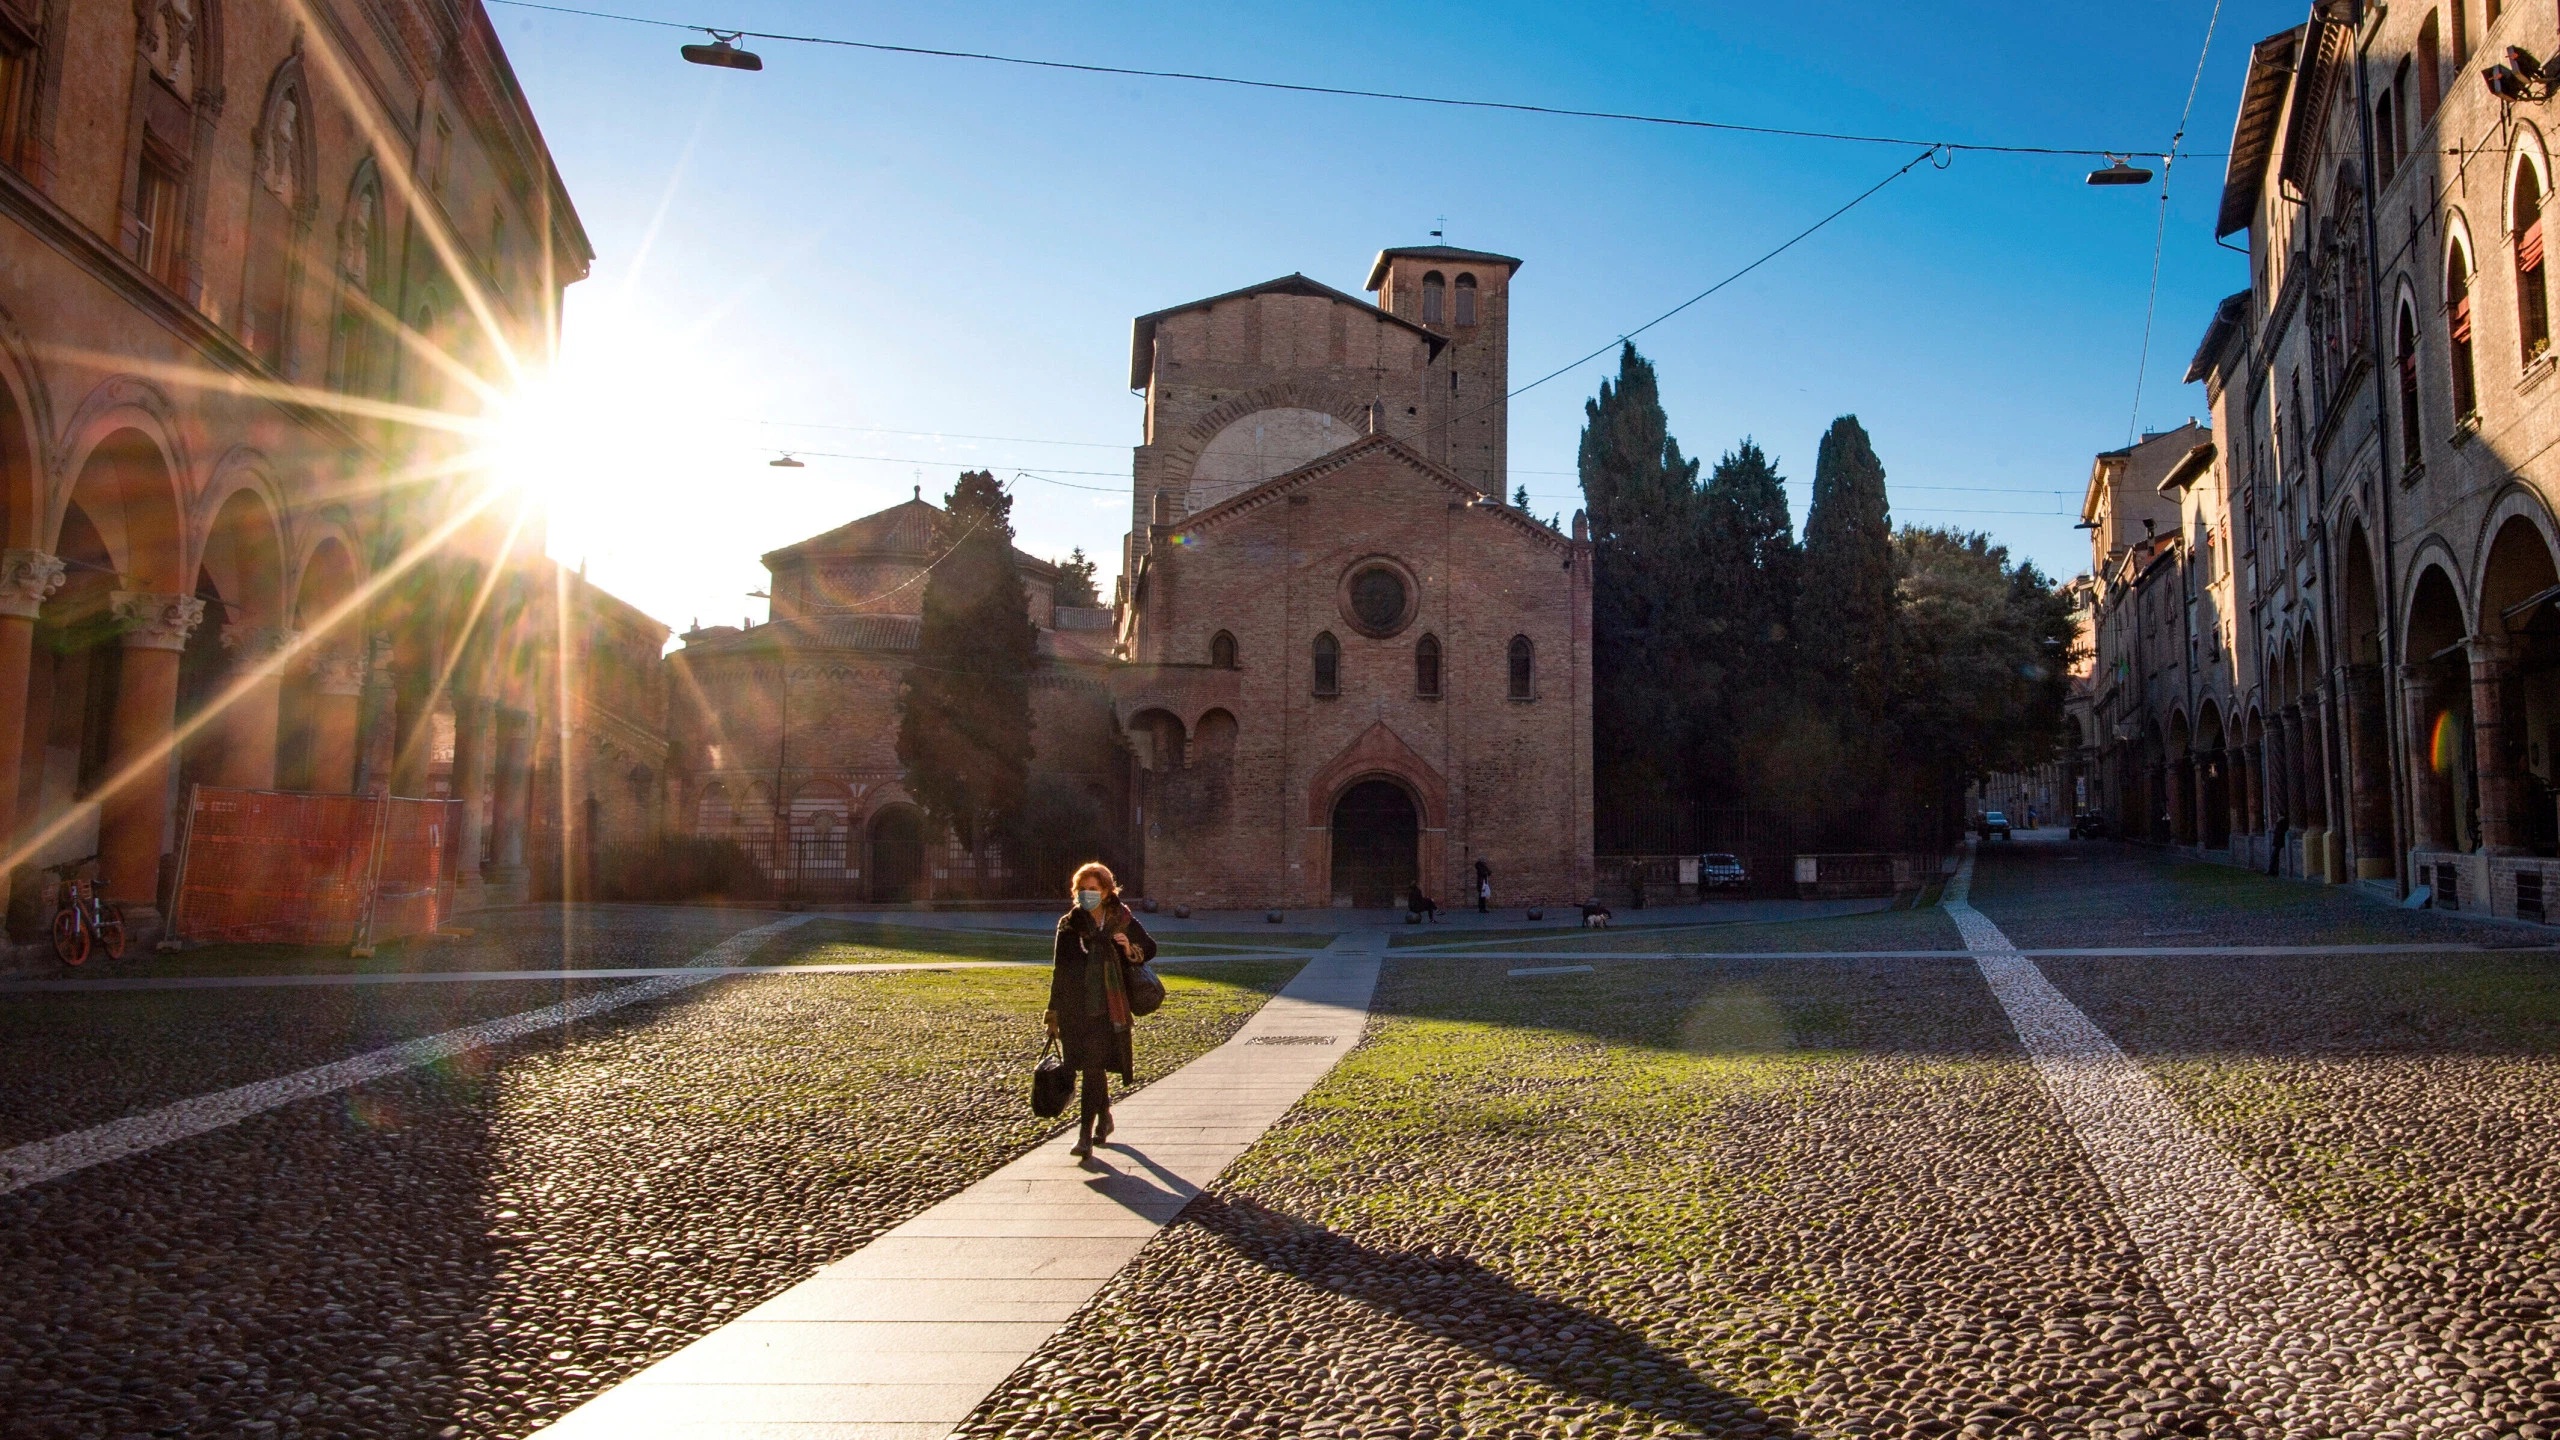 A woman walks past the Basilica of Santo Stefano in Bologna Italy